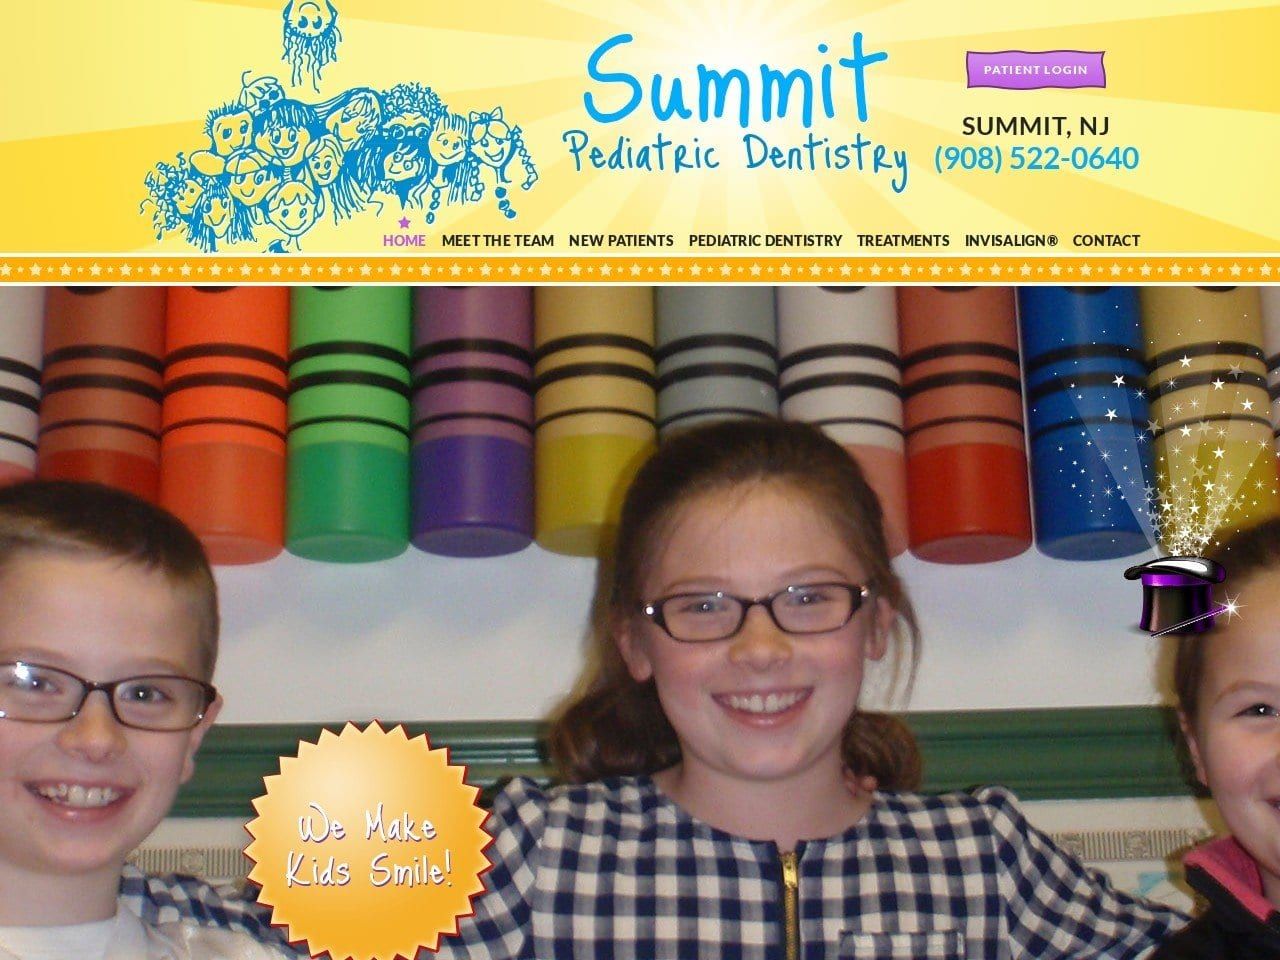 Pediatric Dentist Website Screenshot from summitpediatricdentistry.com